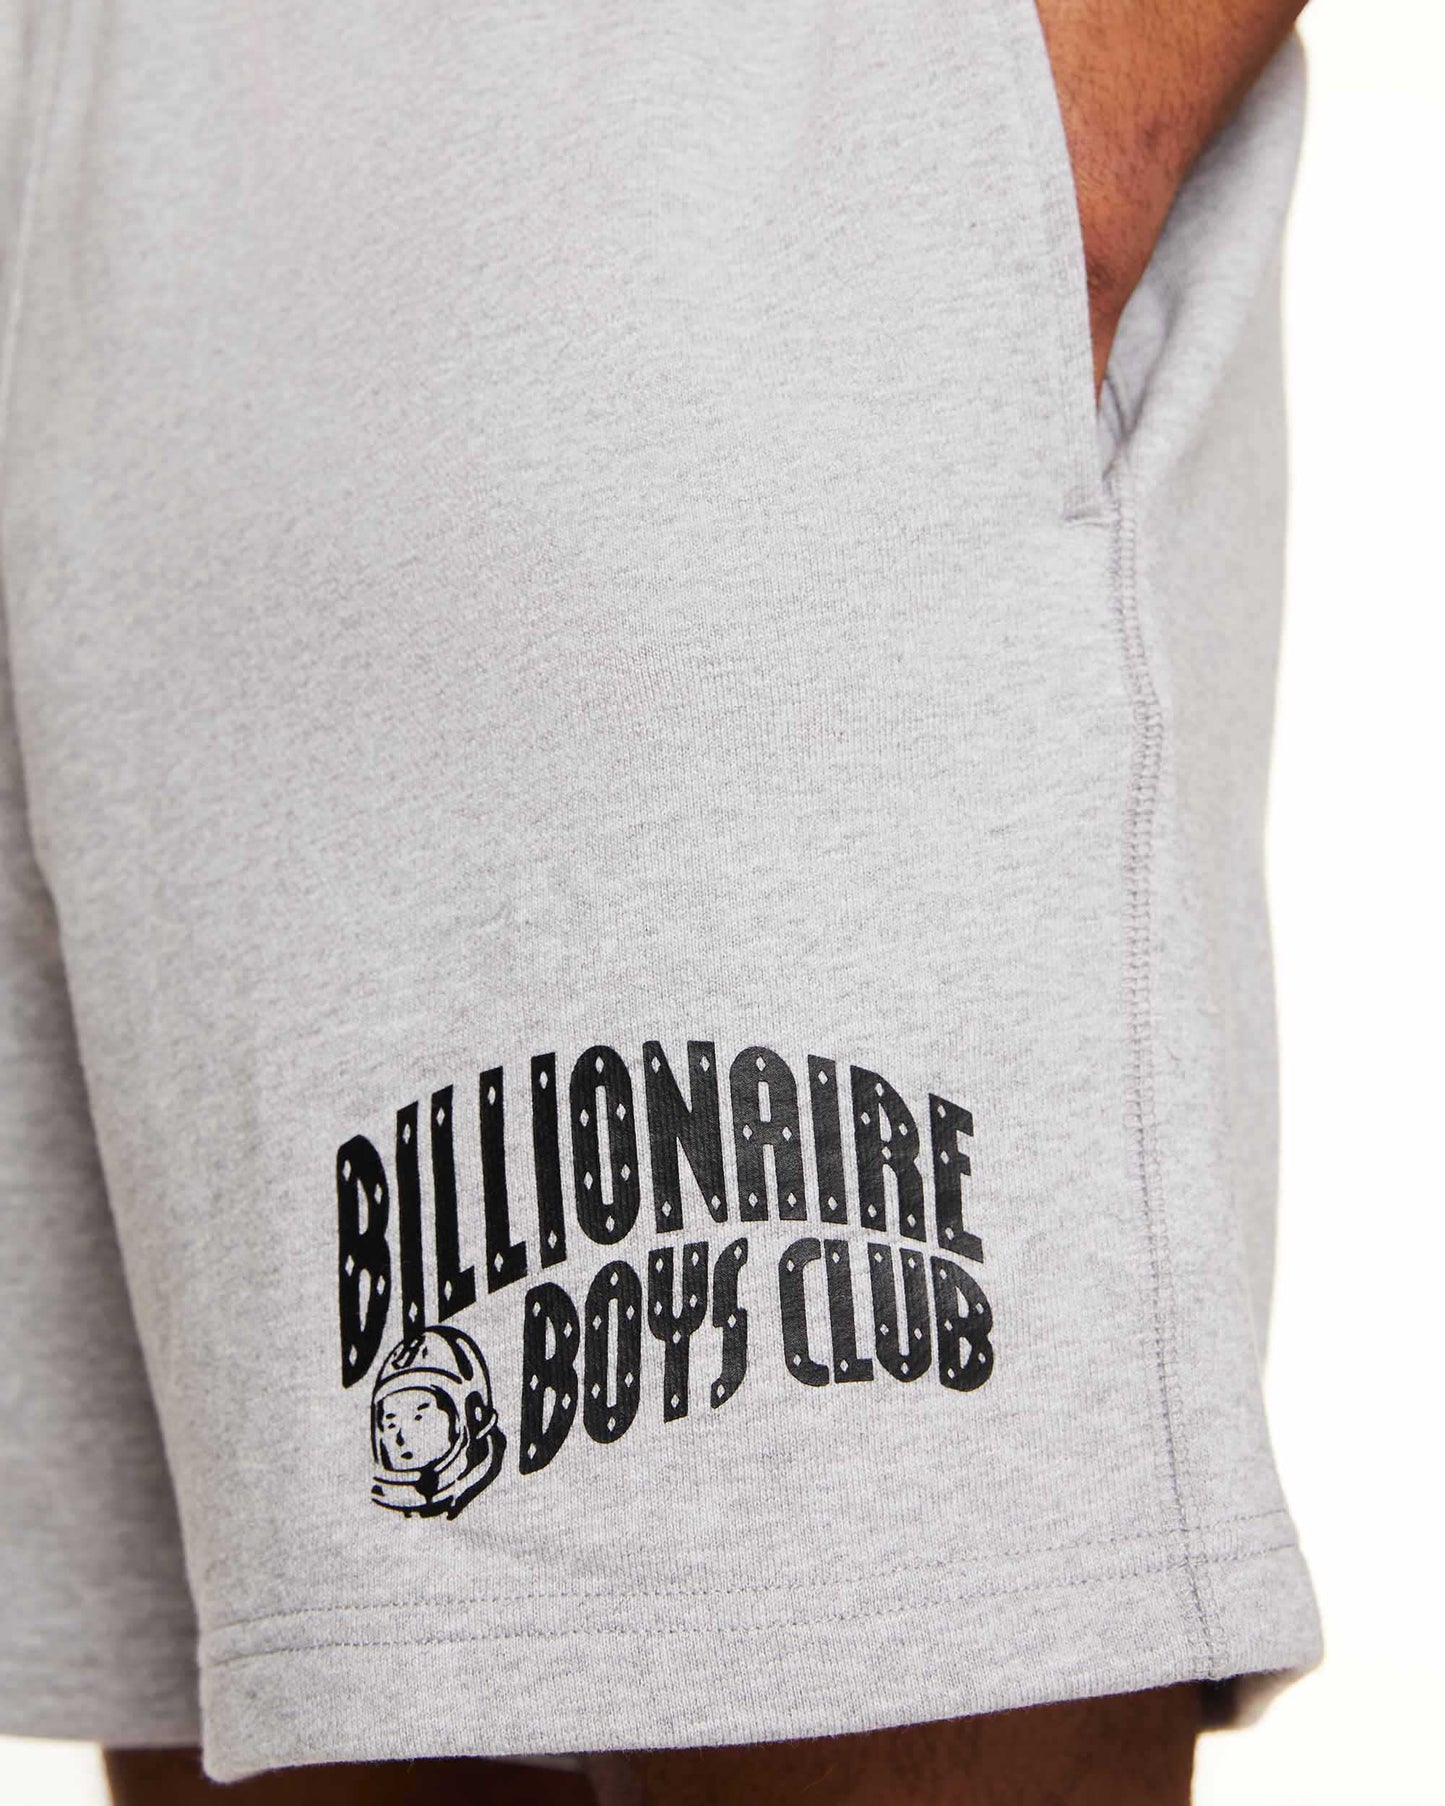 Classic Curve Sweatshort - Billionaire Boys Club Exclusives